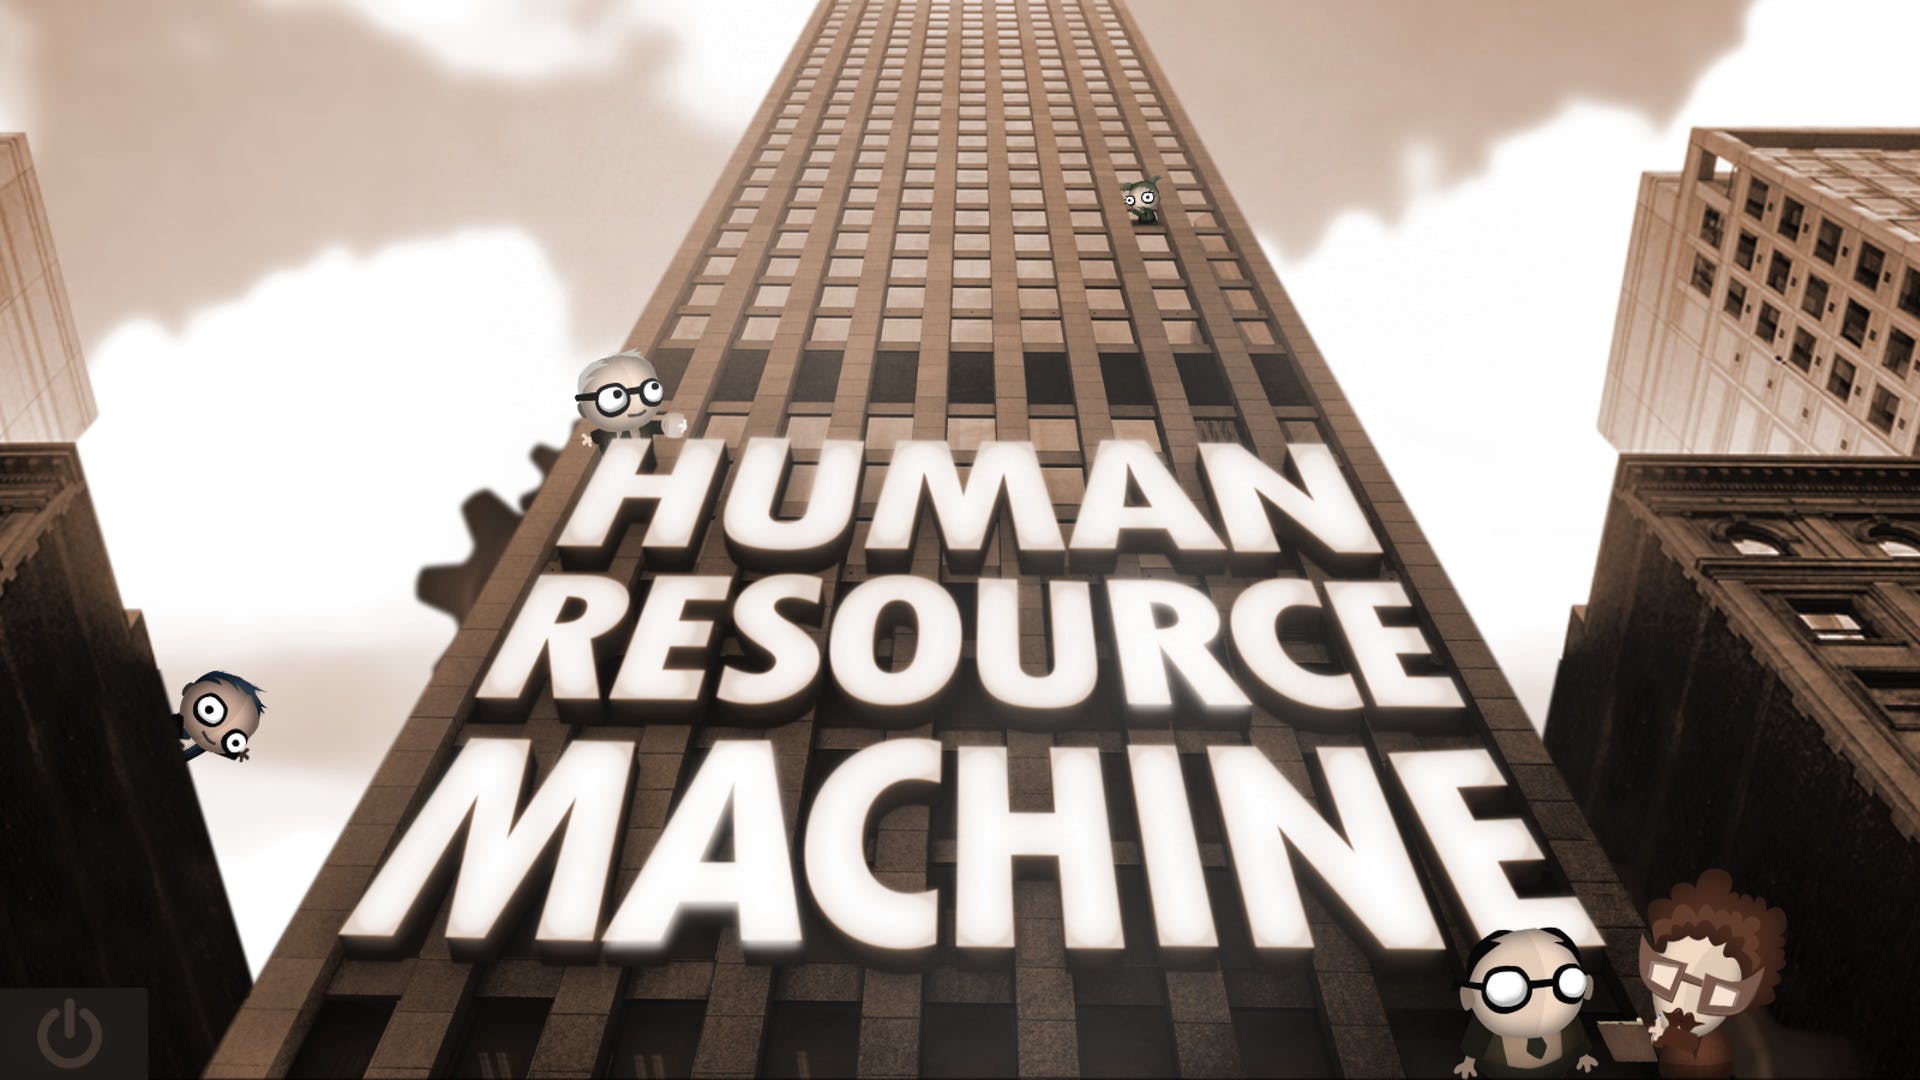 Human Resource Machine media 1